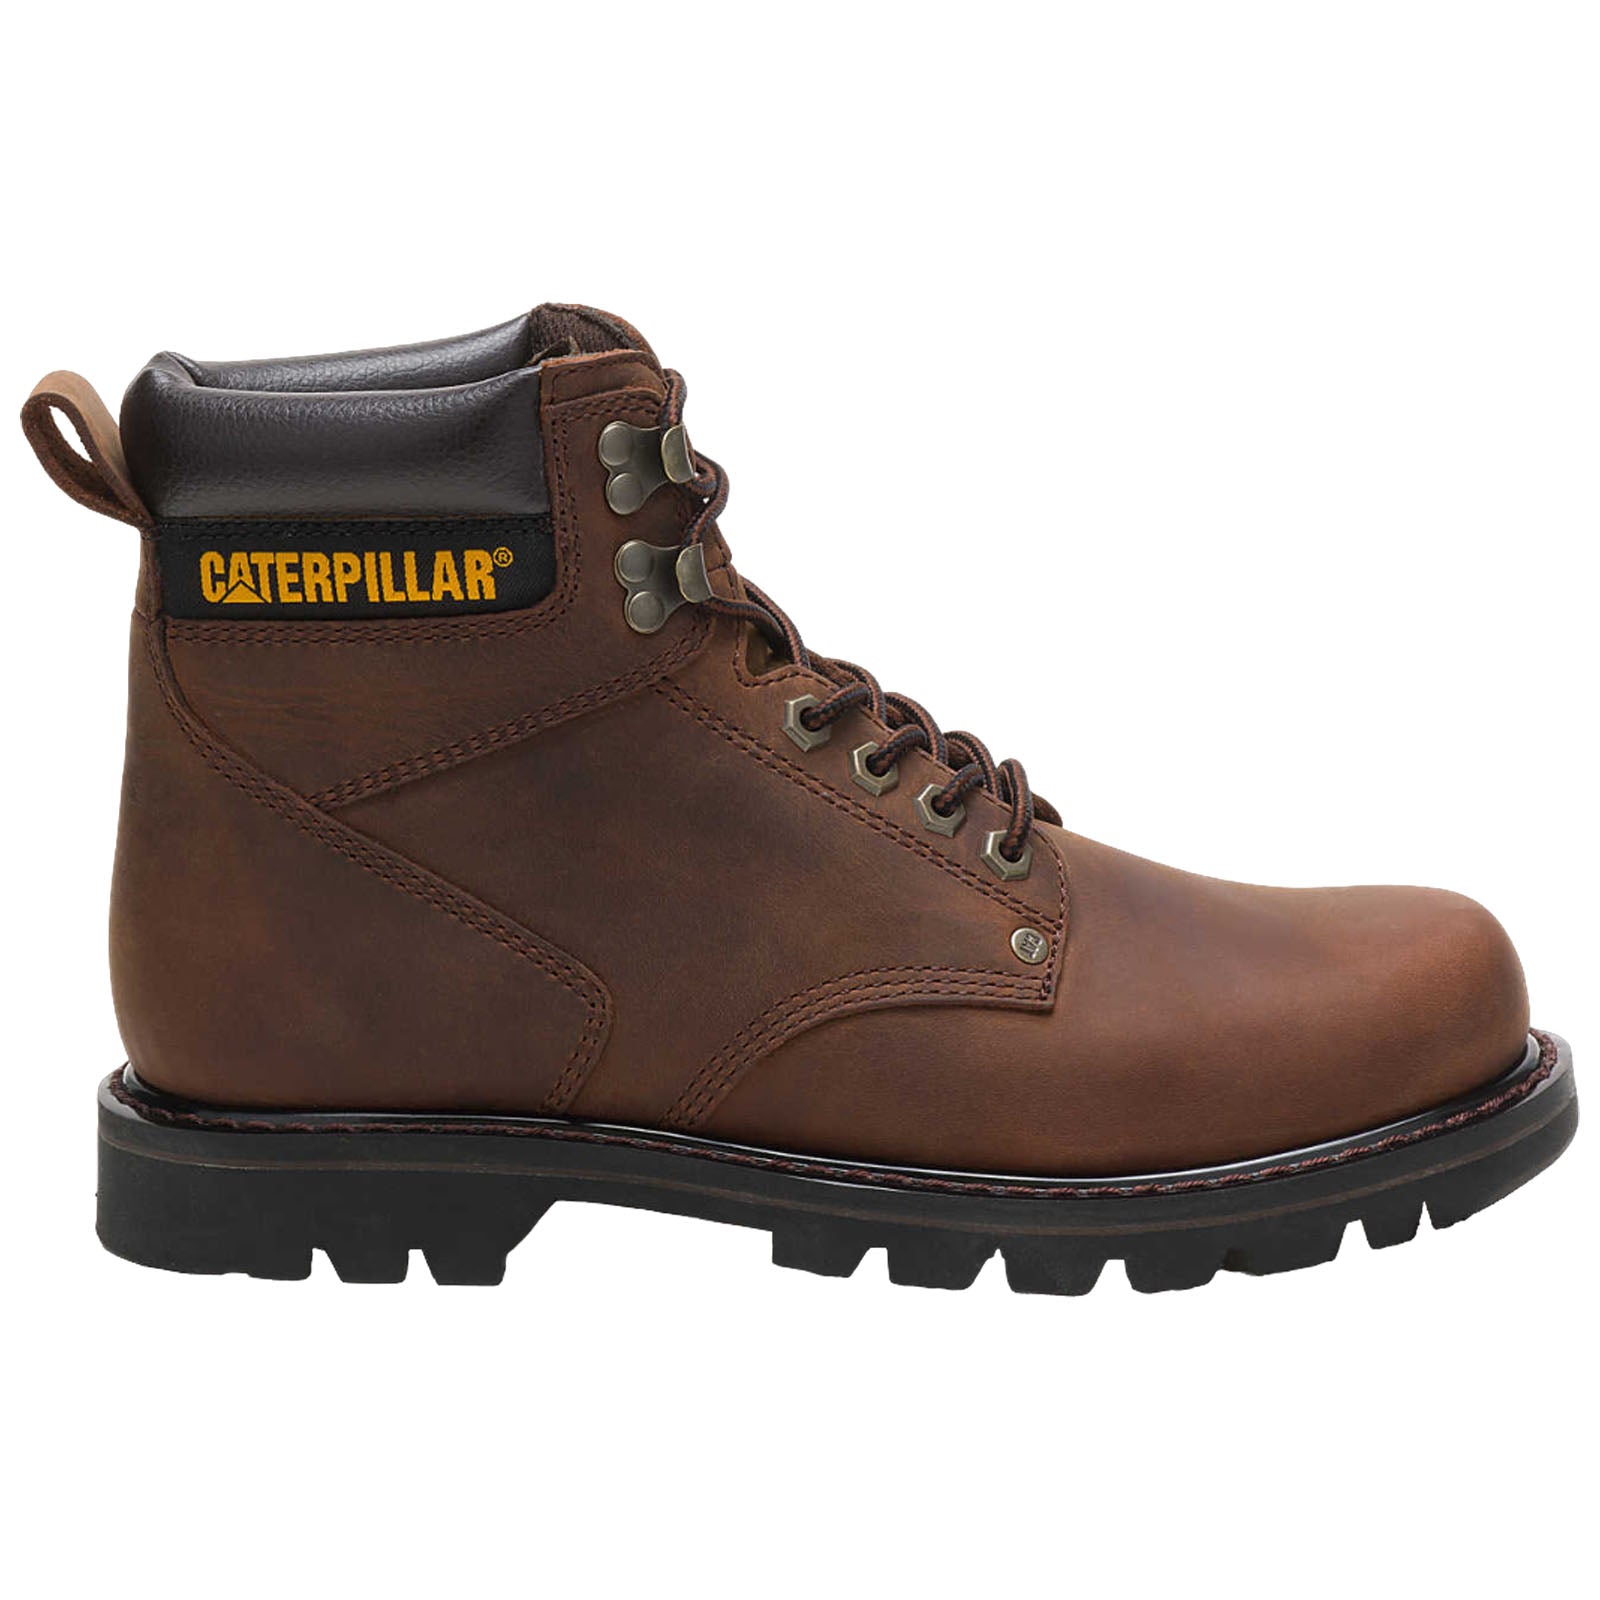 Caterpillar Mens Second Shift Waterproof Safety Boots - 11 UK